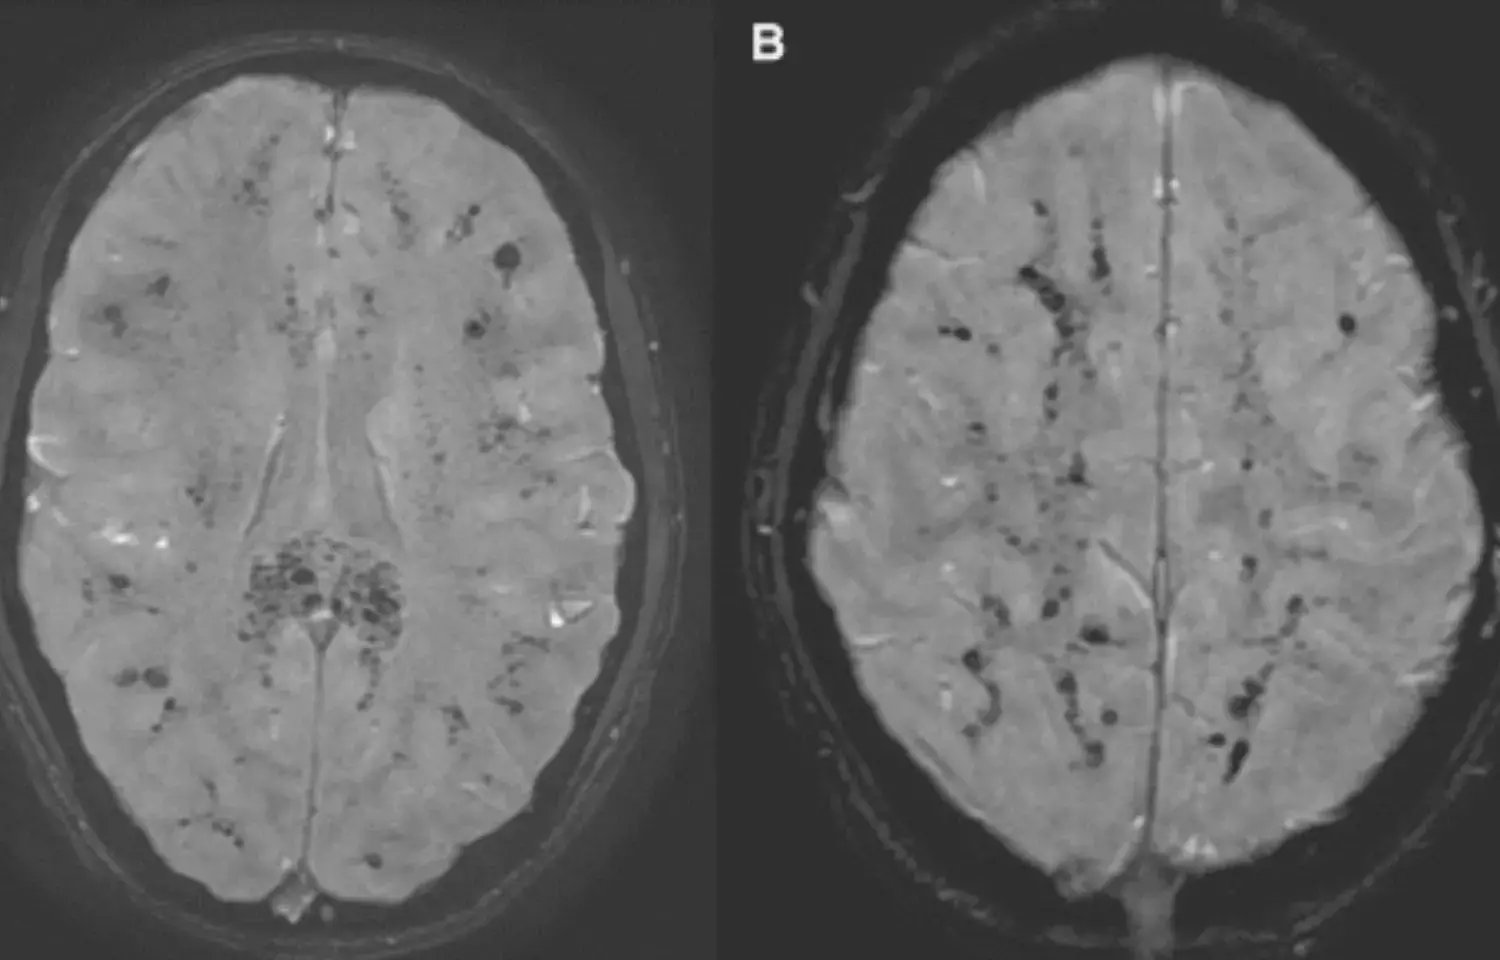 New cerebral microbleeds observed on MRI post-TAVR: Circulation